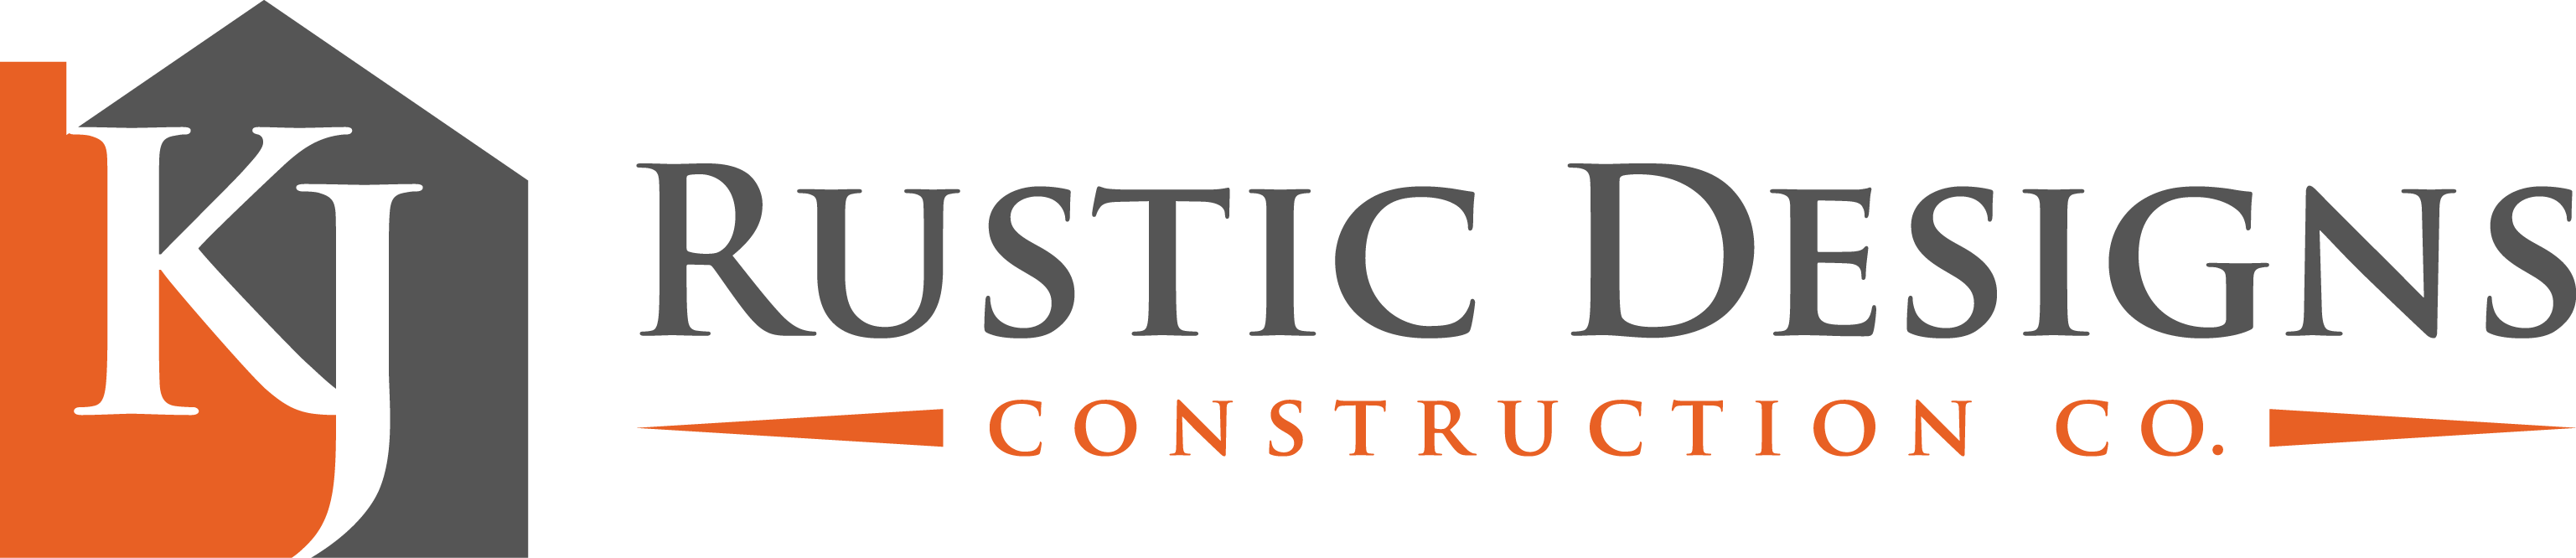 Rustic Construction Logo - KJ Rustic Designs & Residential Construction